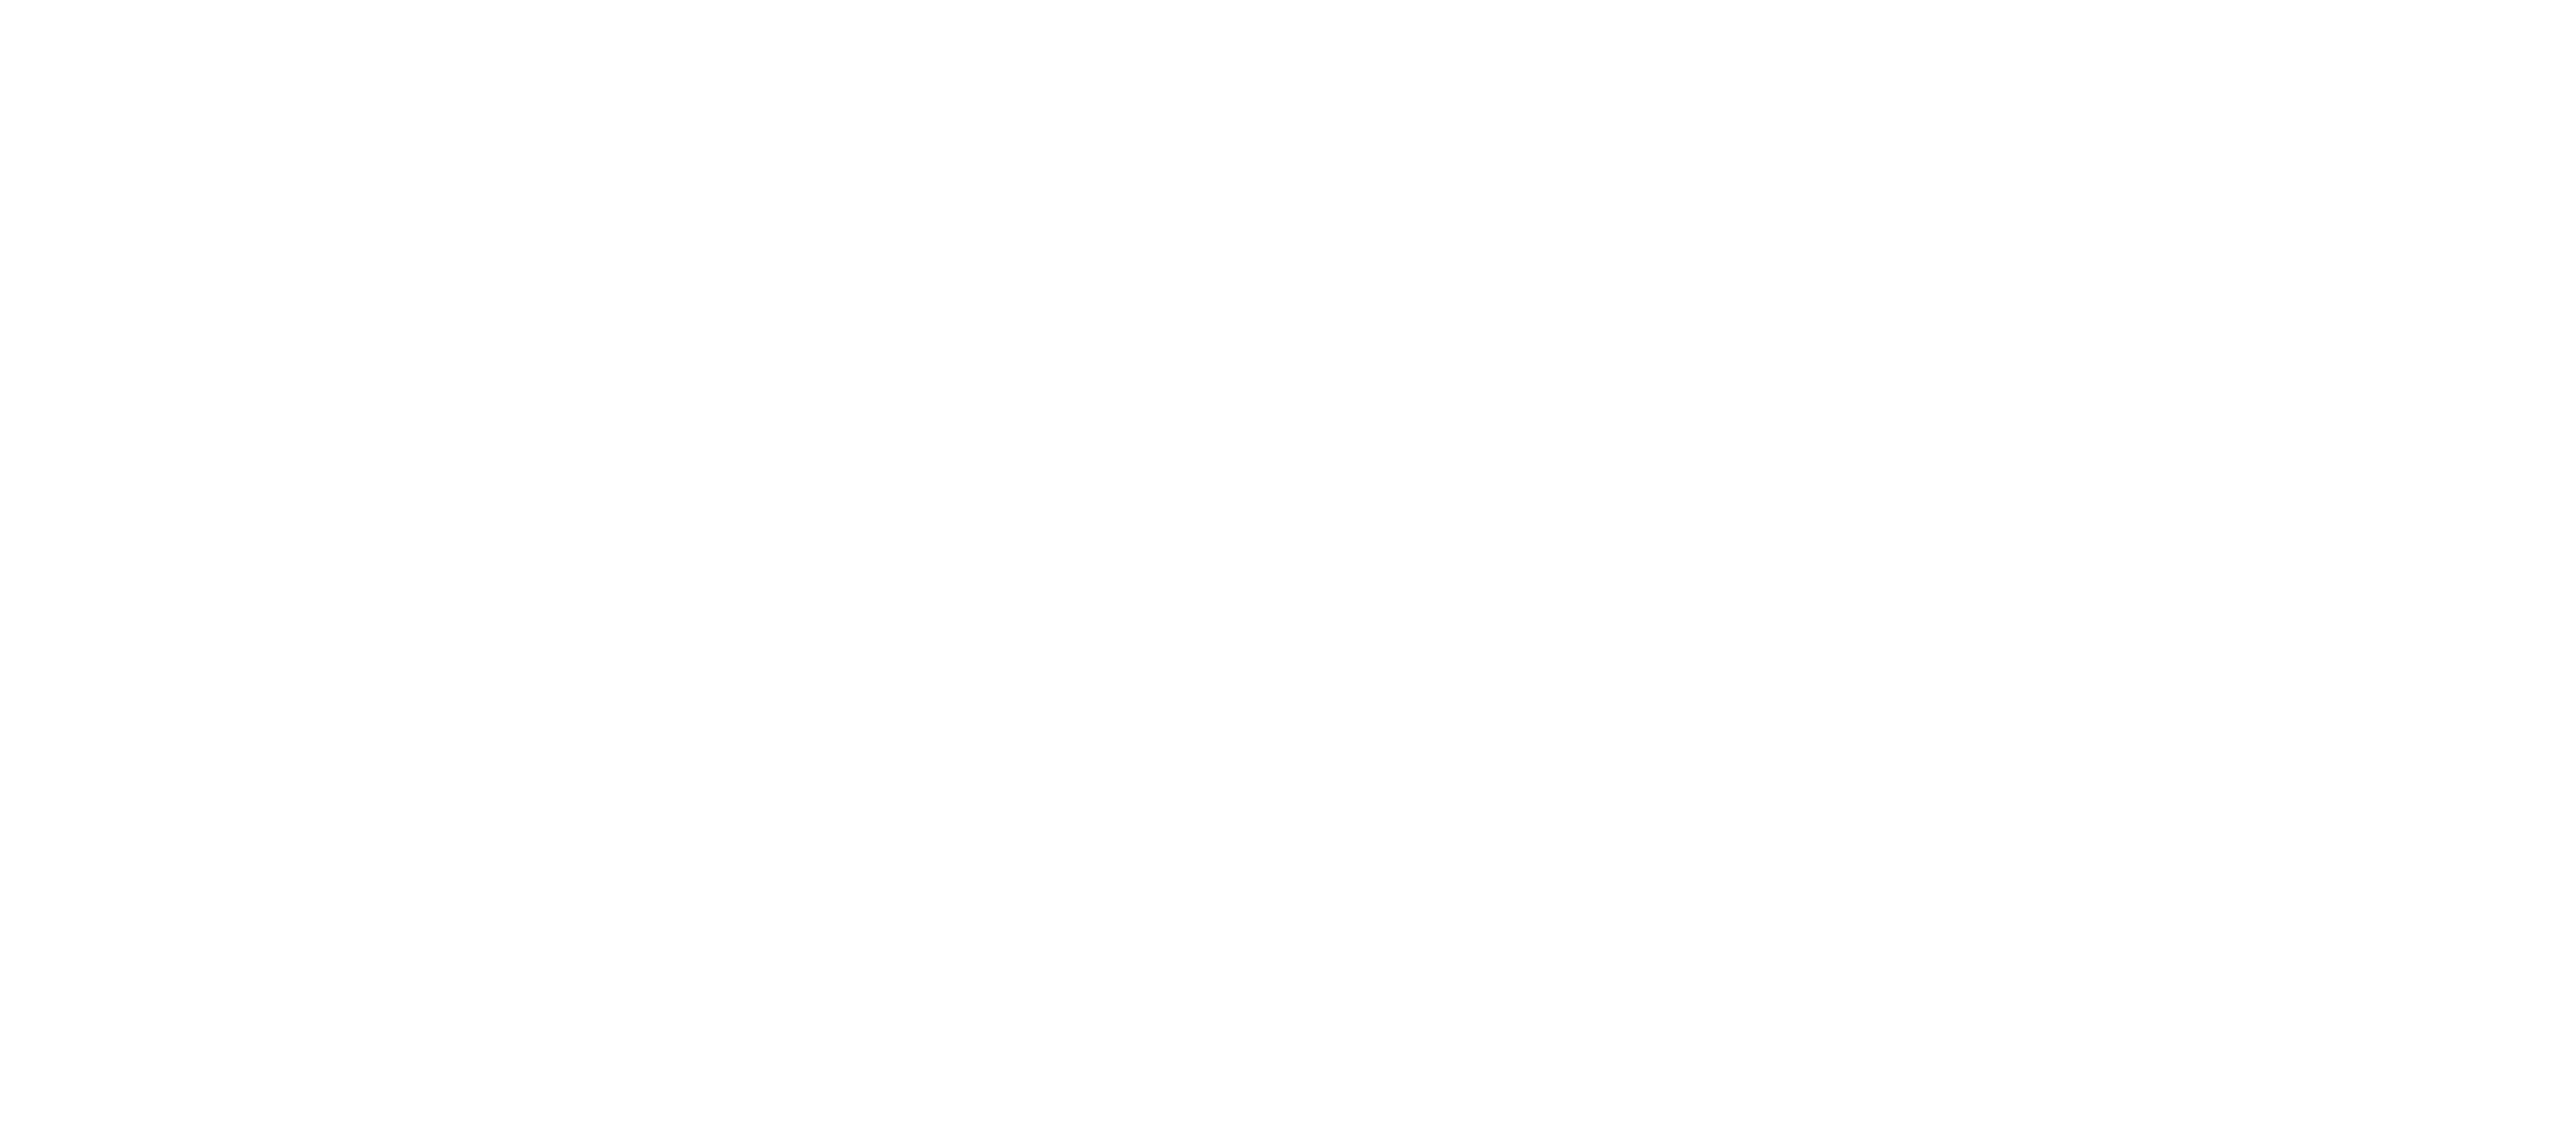 Filmmingo production white